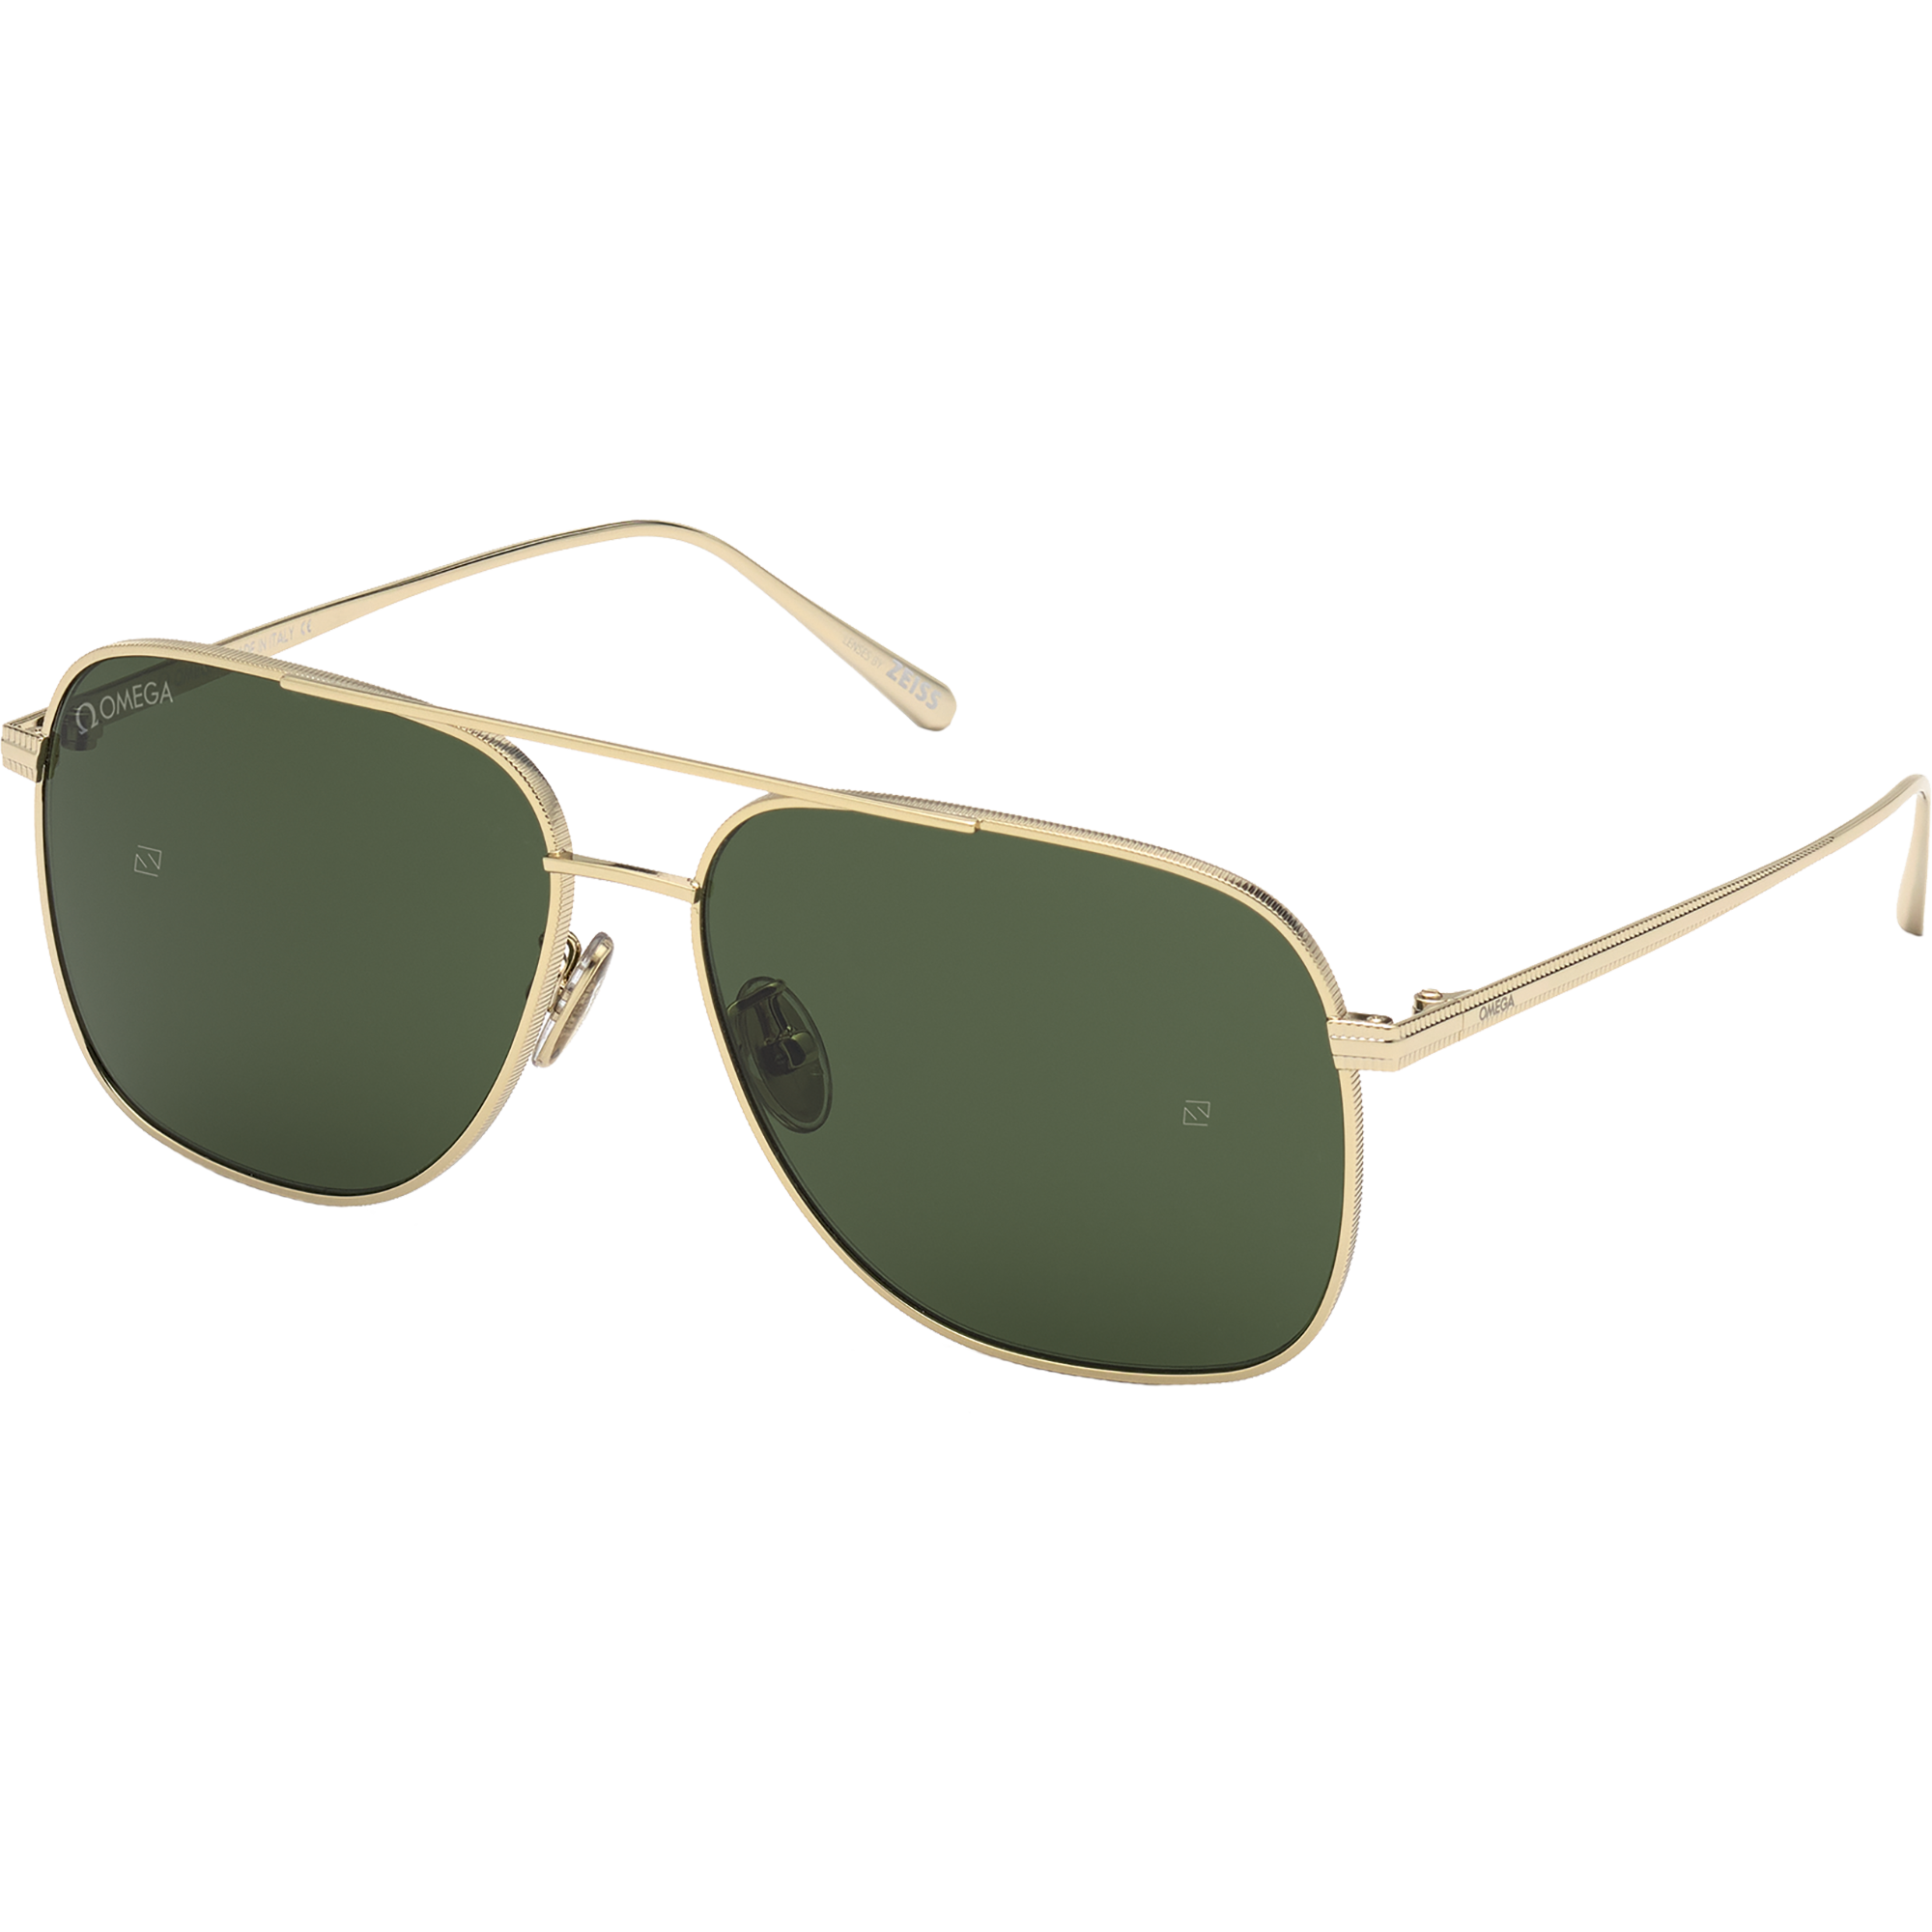 Sunglasses - Pilot style, Man - OM0026-H6032N